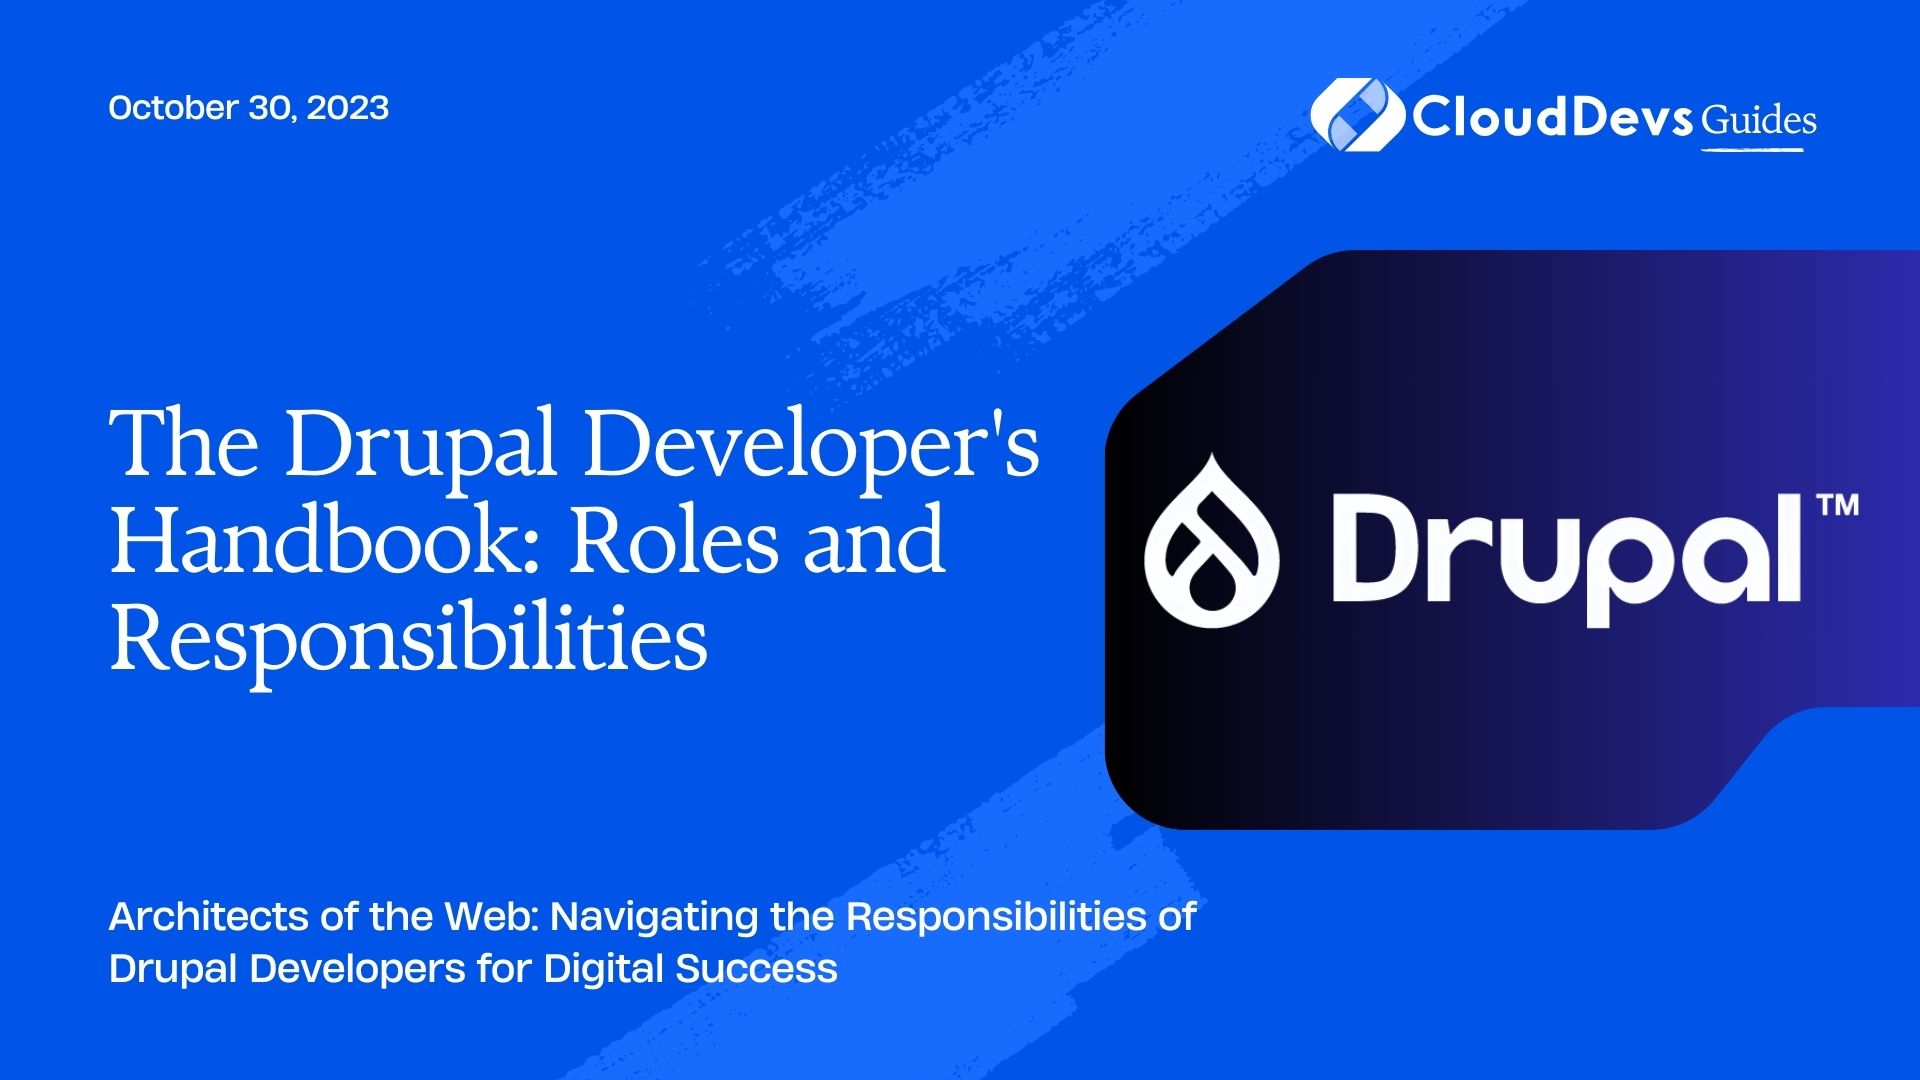 The Drupal Developer's Handbook: Roles and Responsibilities